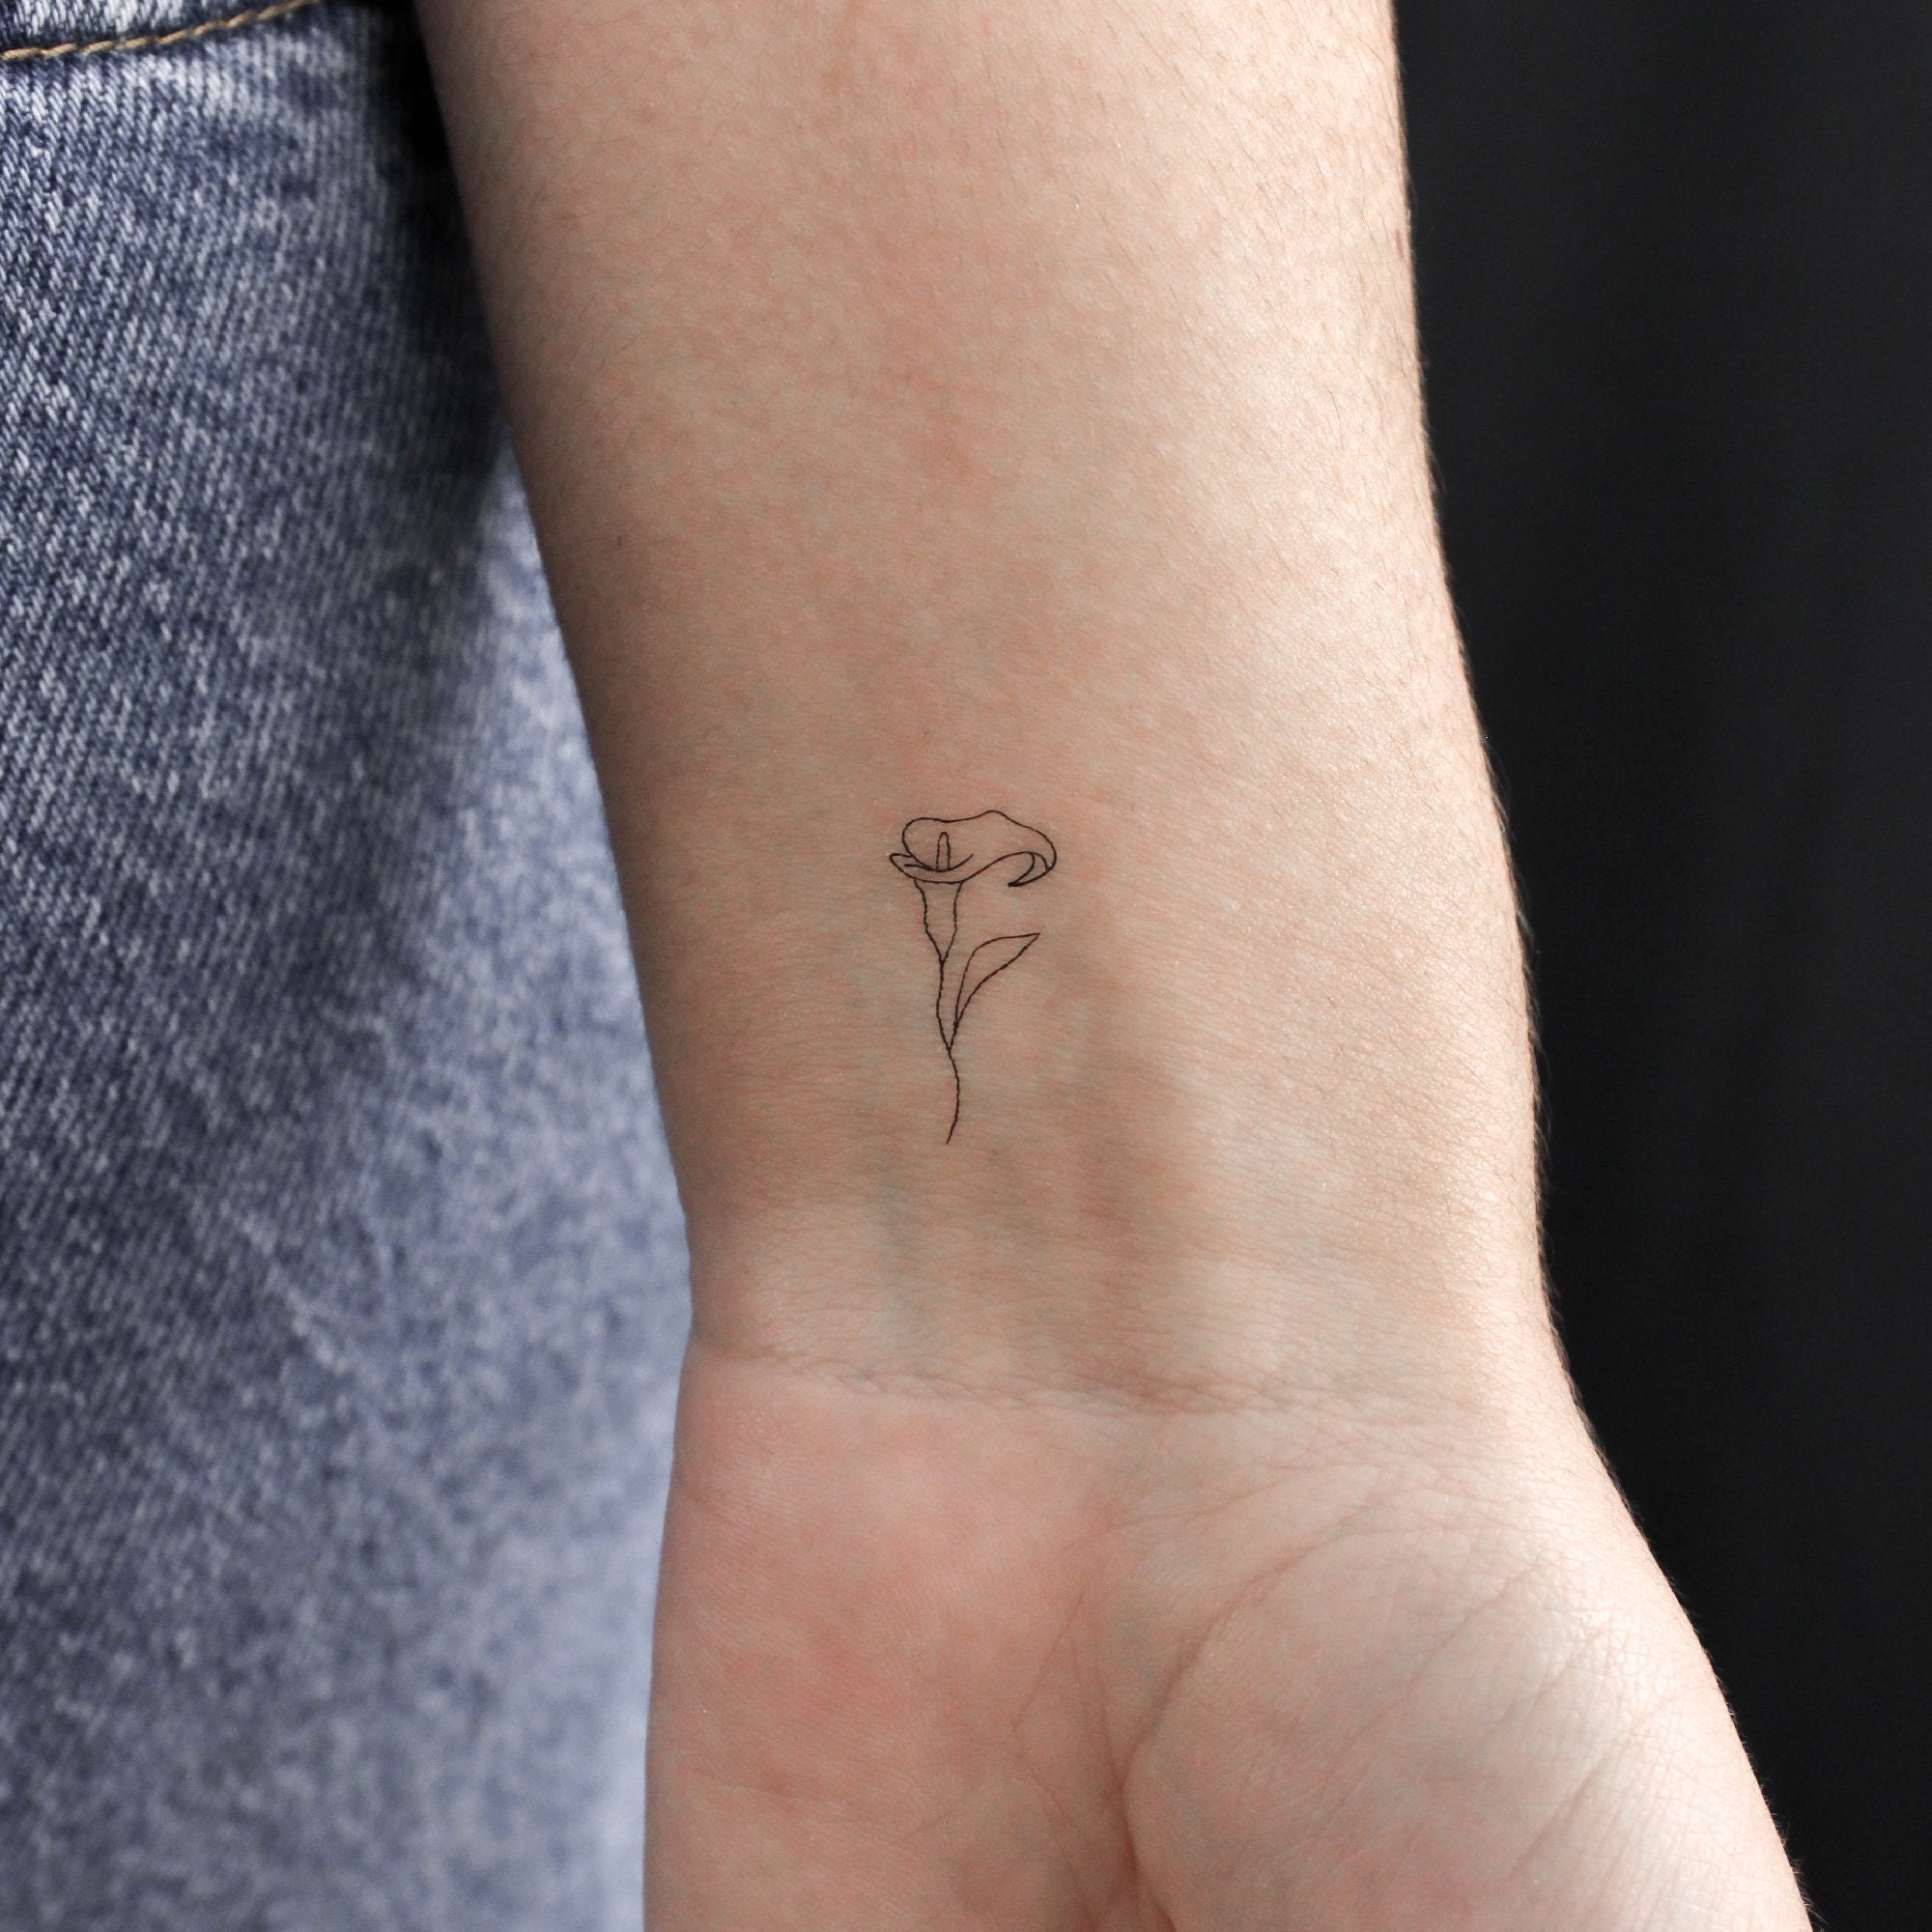 Details more than 161 calla flower tattoo best